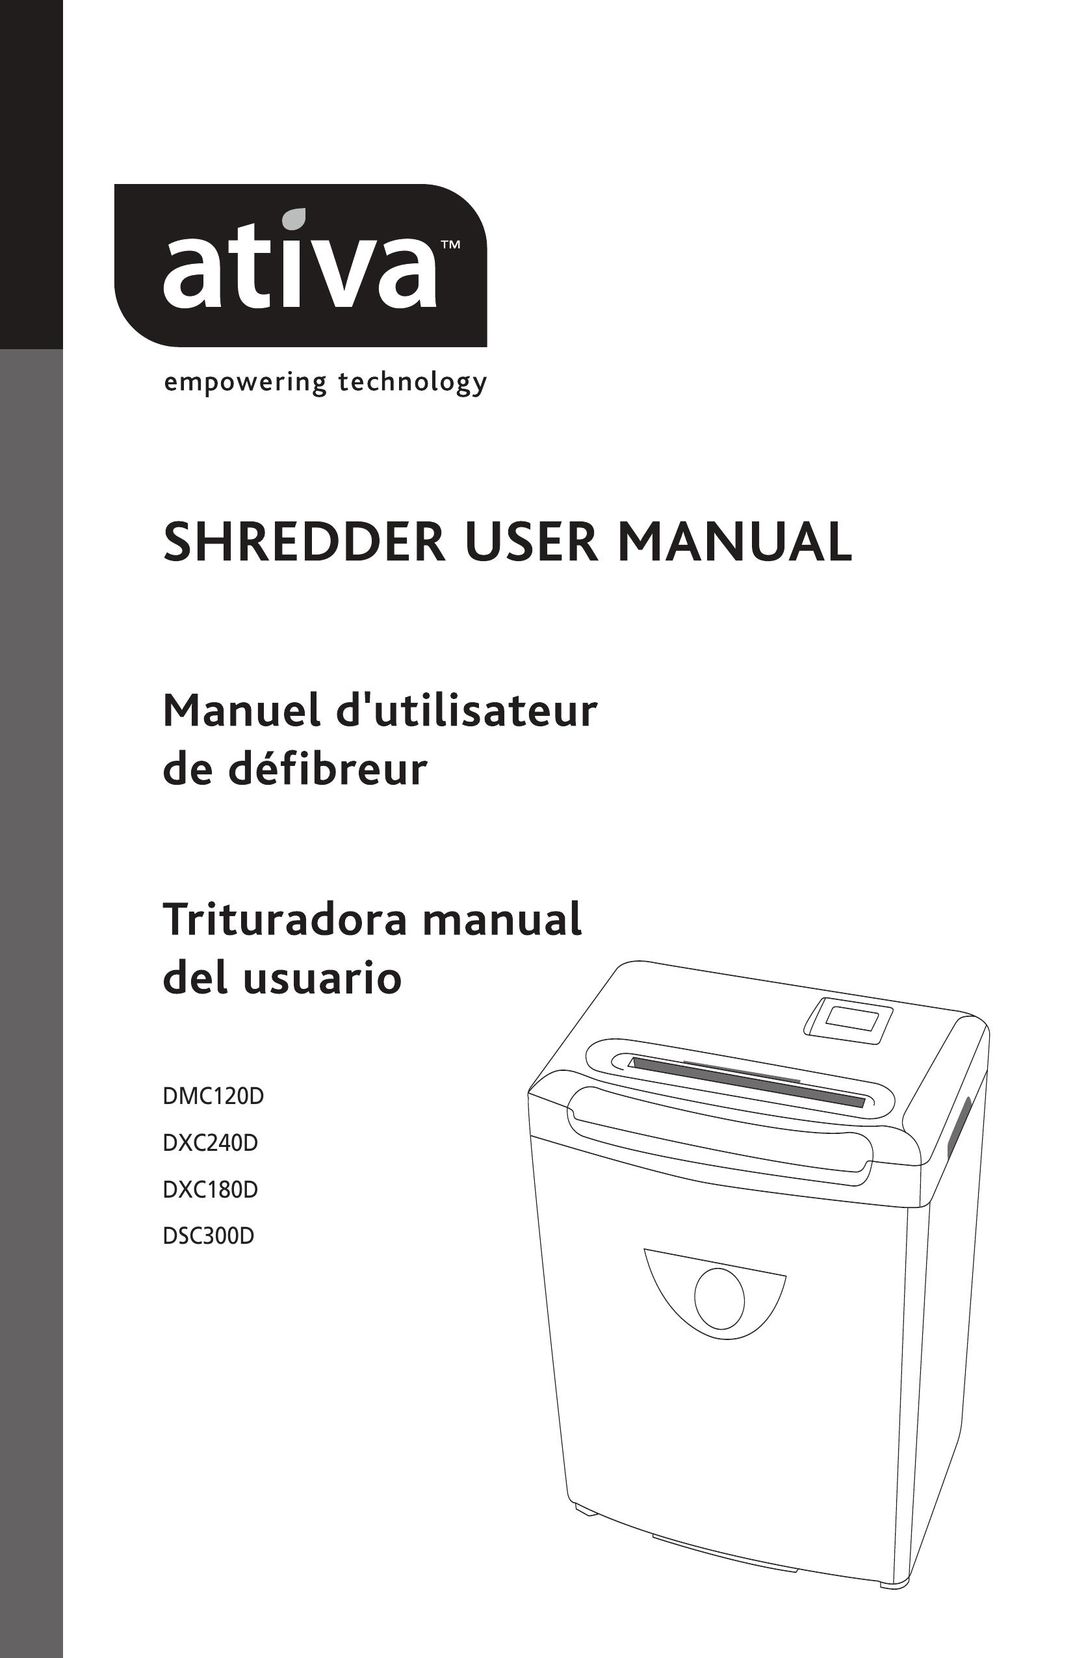 Ativa DMC120D Paper Shredder User Manual